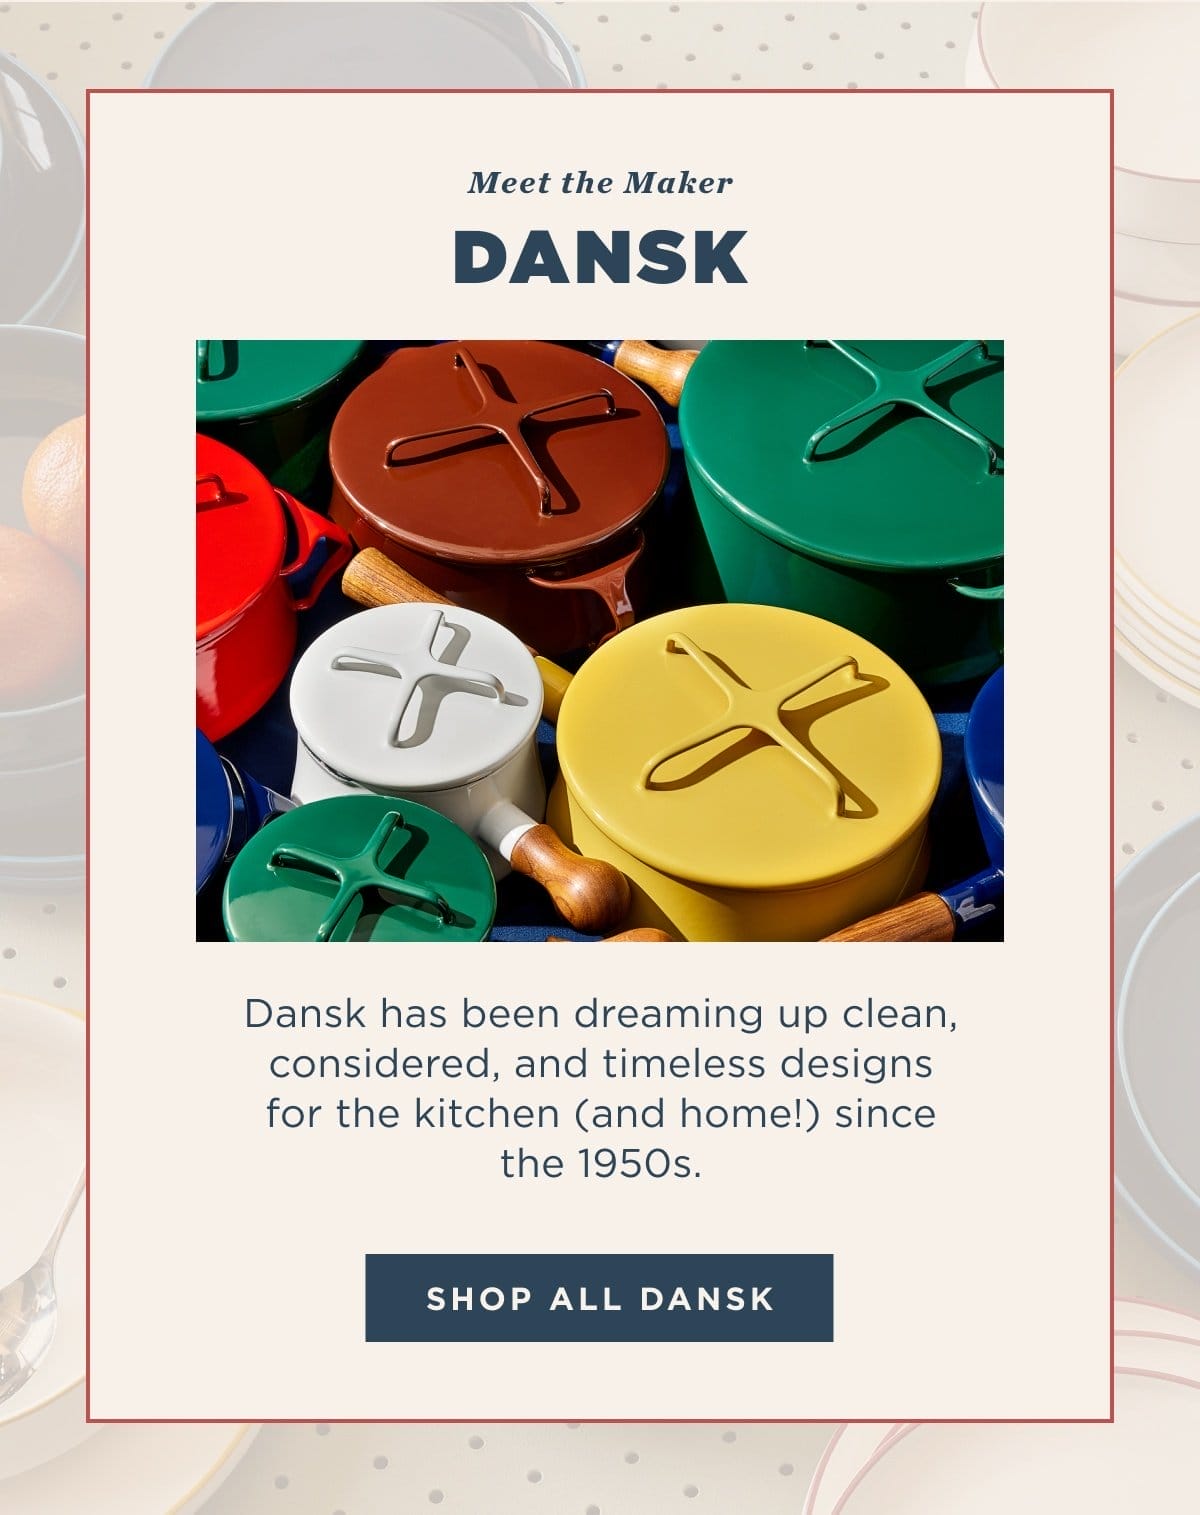 Meet Dansk